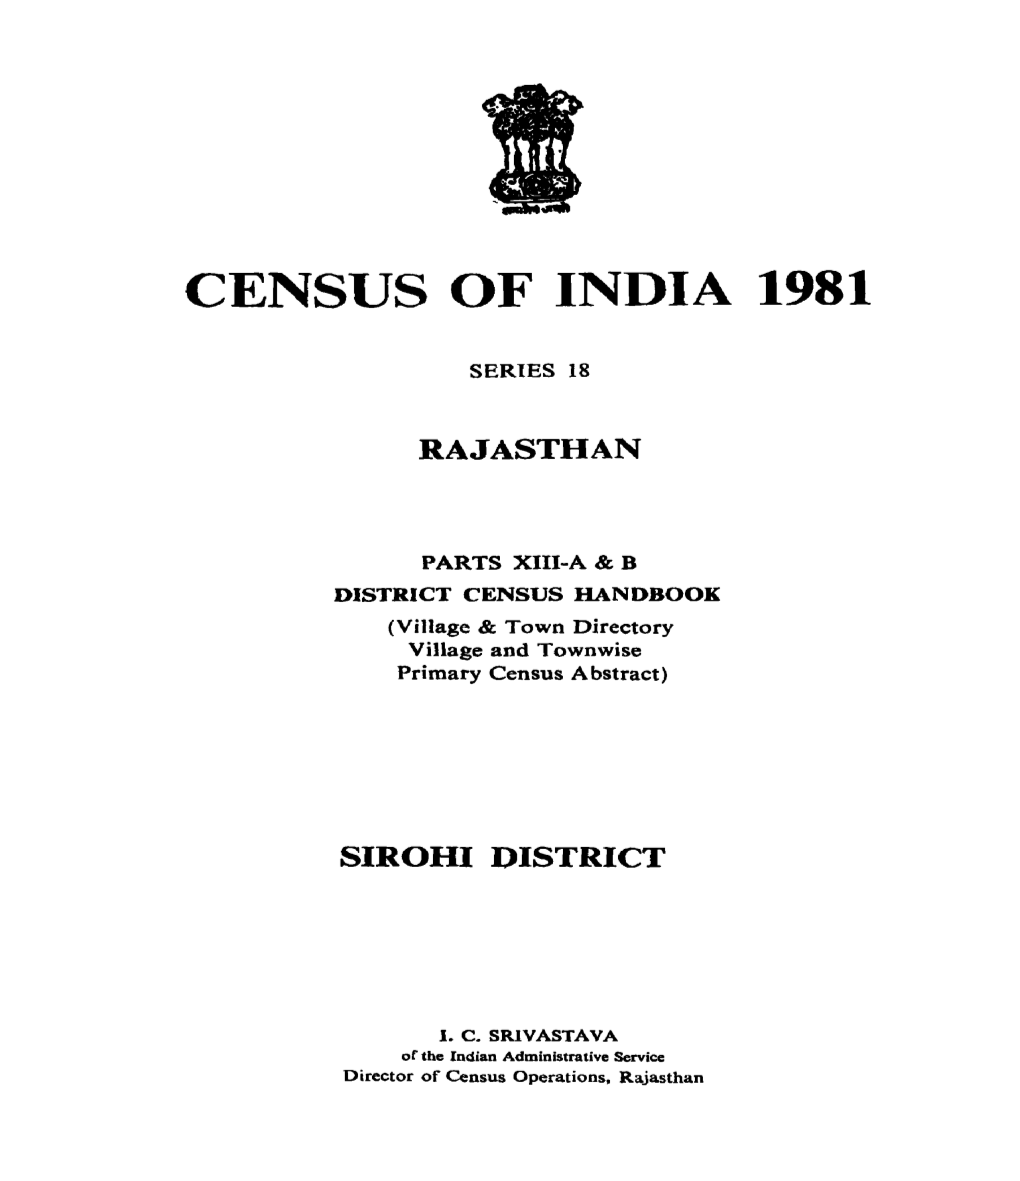 District Census Handbook, Sirohi, Part XIII-A & B, Series-18, Rajasthan